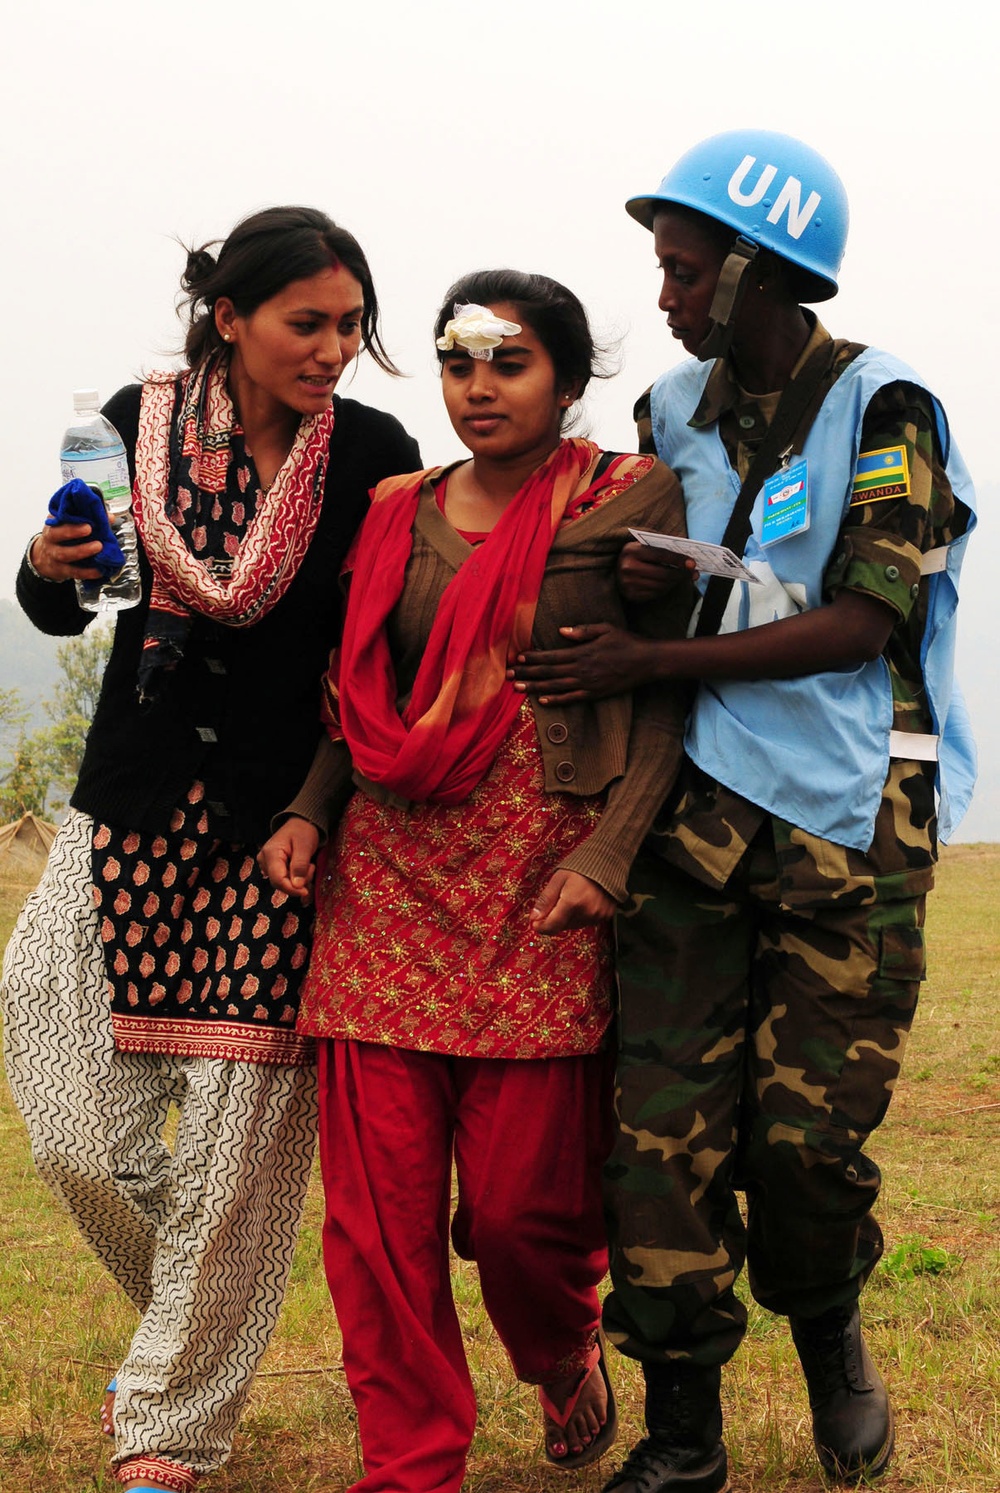 Rwandan soldiers practice protecting civilians during peacekeeping training